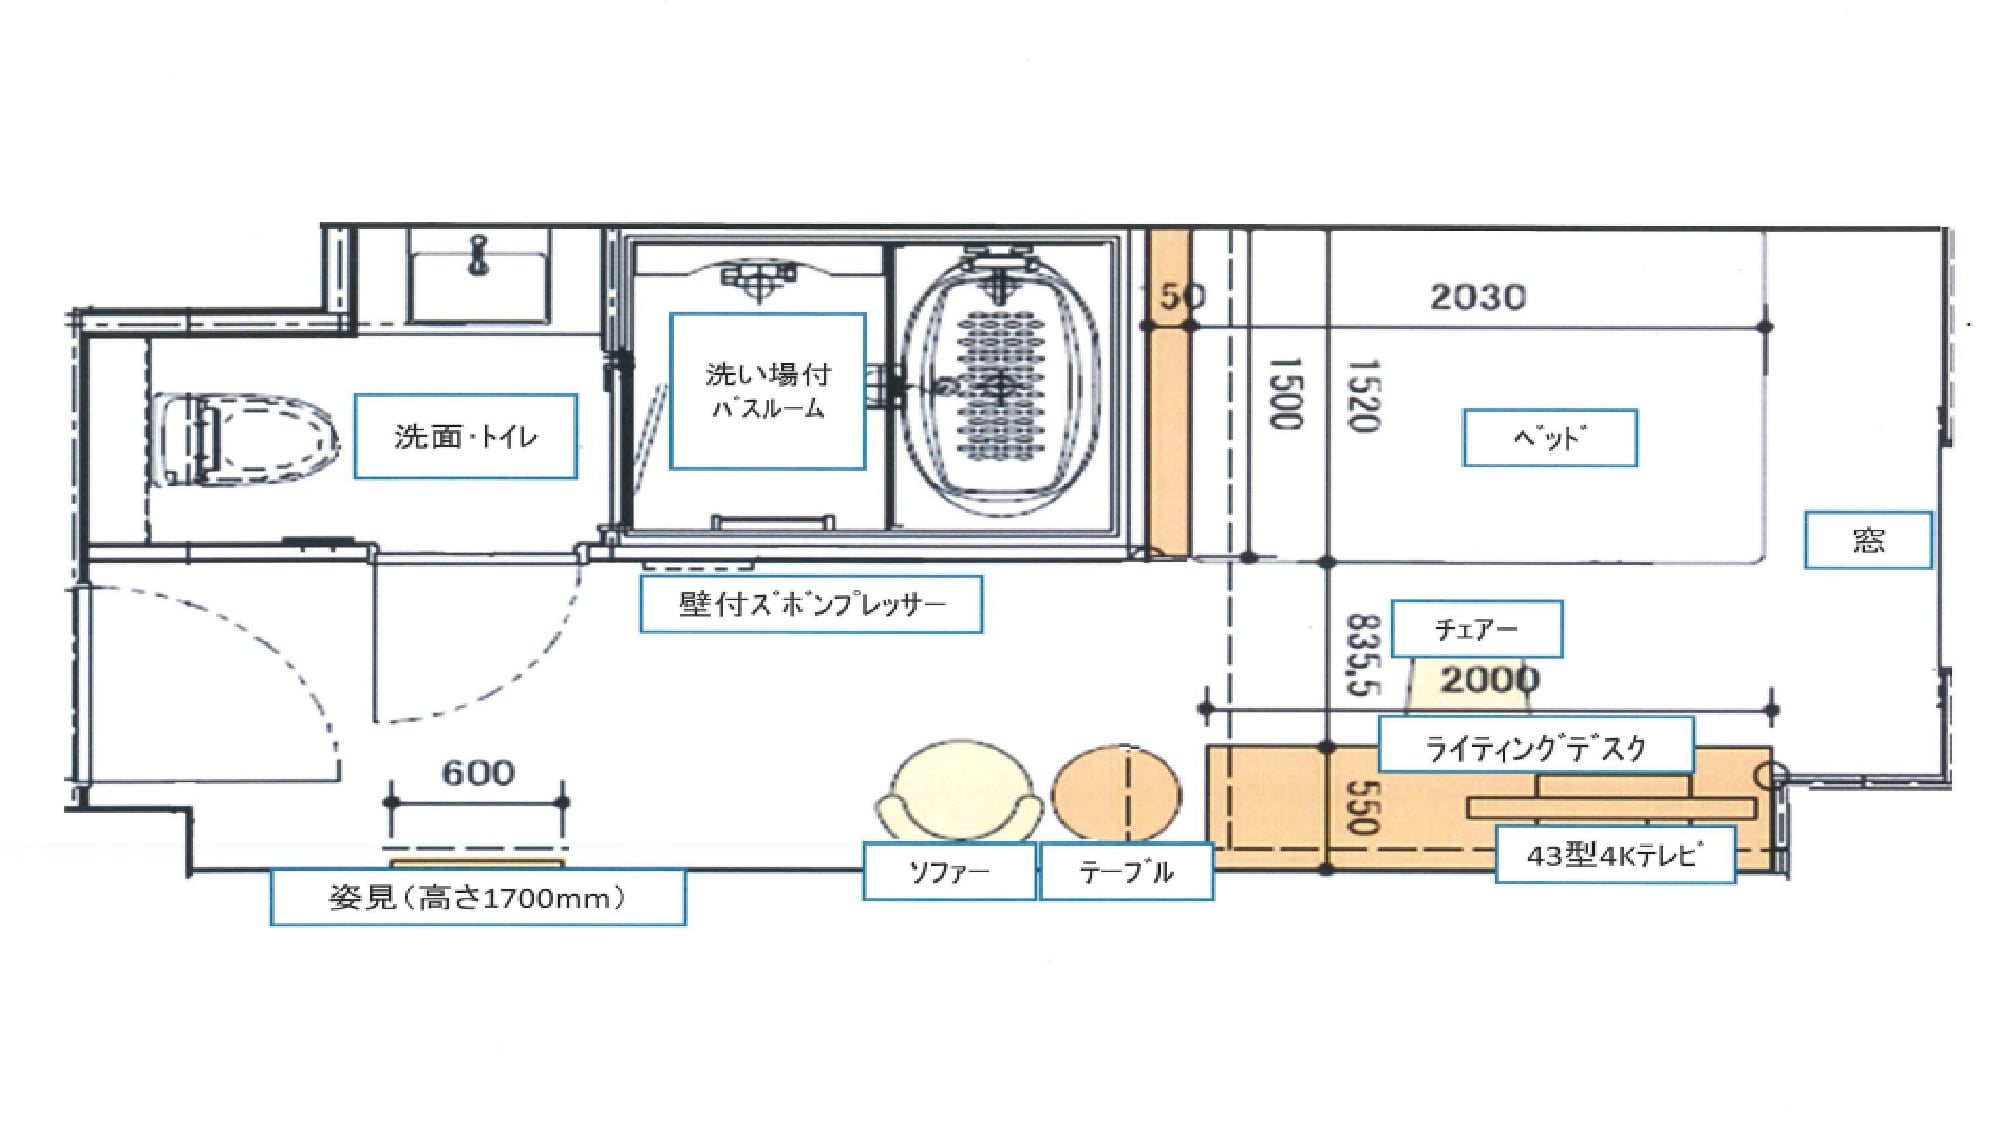 Room layout example (single room)